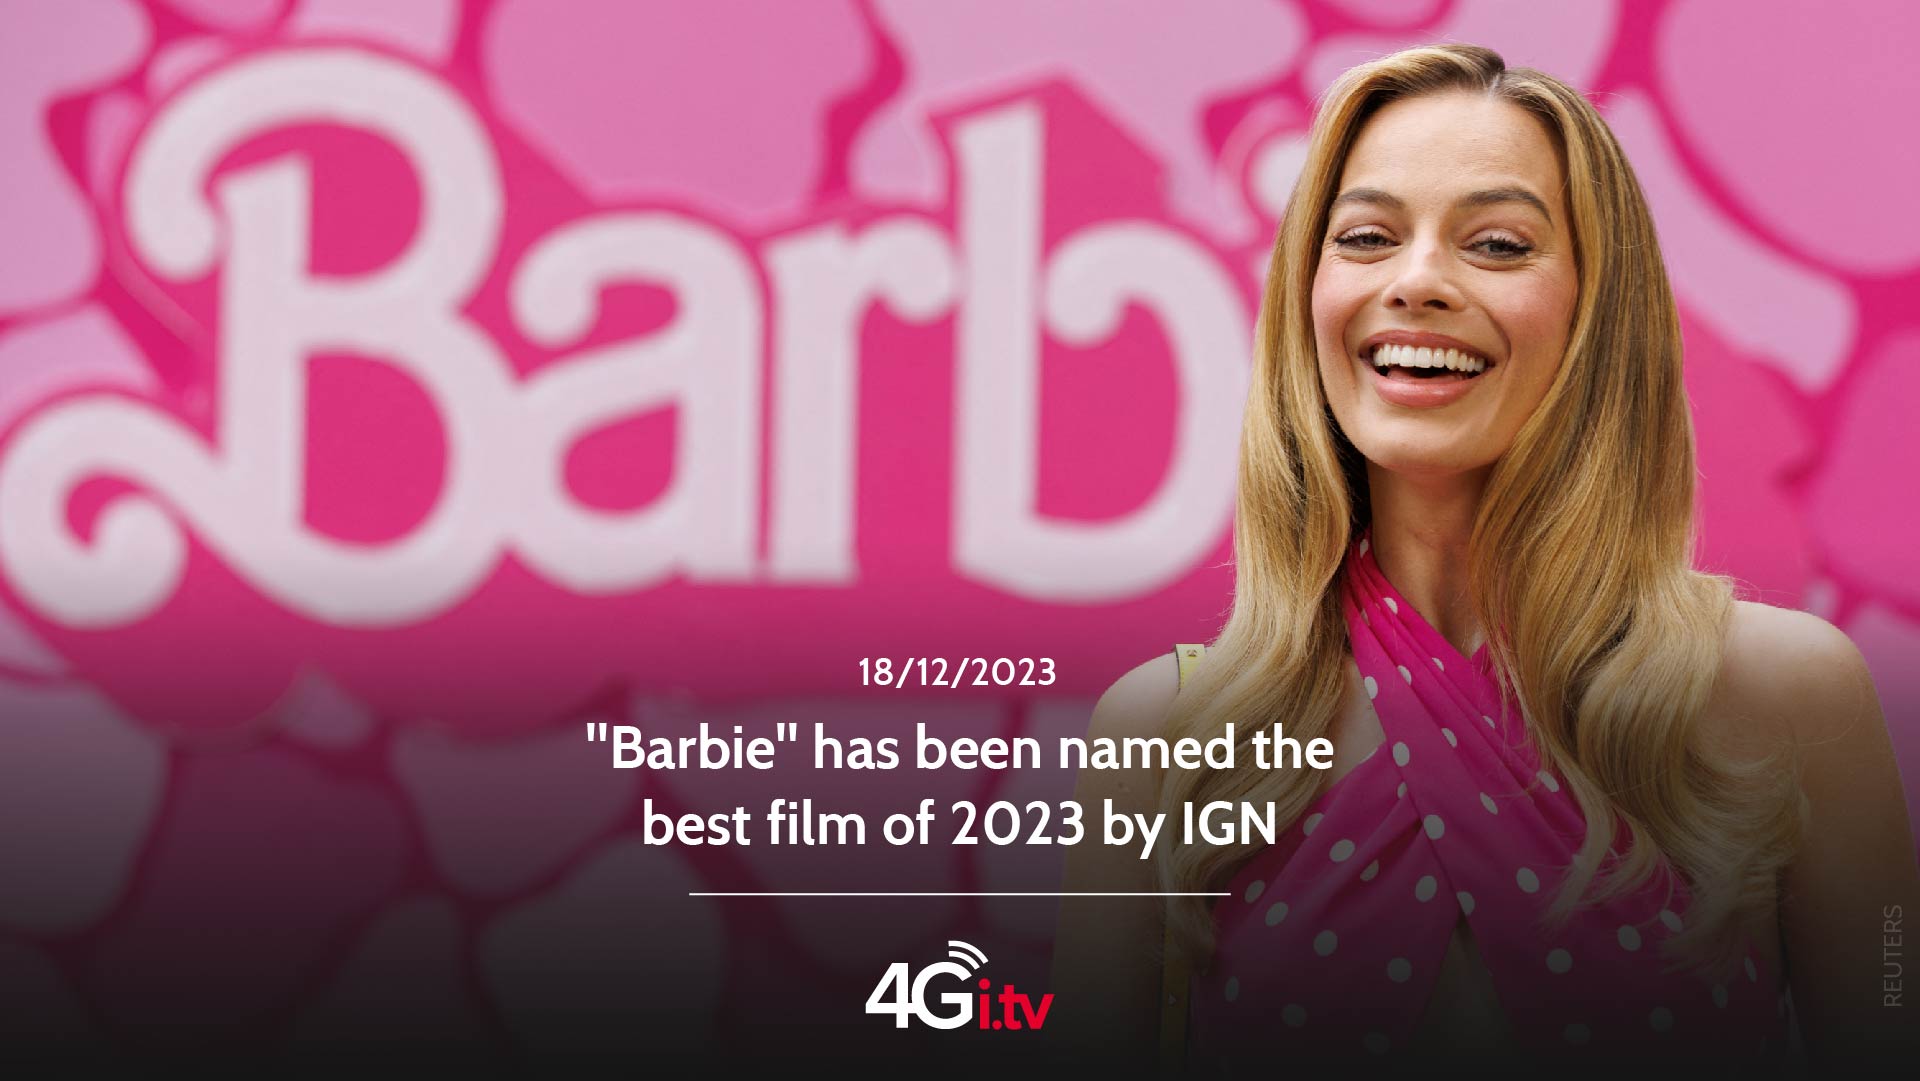 Lee más sobre el artículo “Barbie” has been named the best film of 2023 by IGN